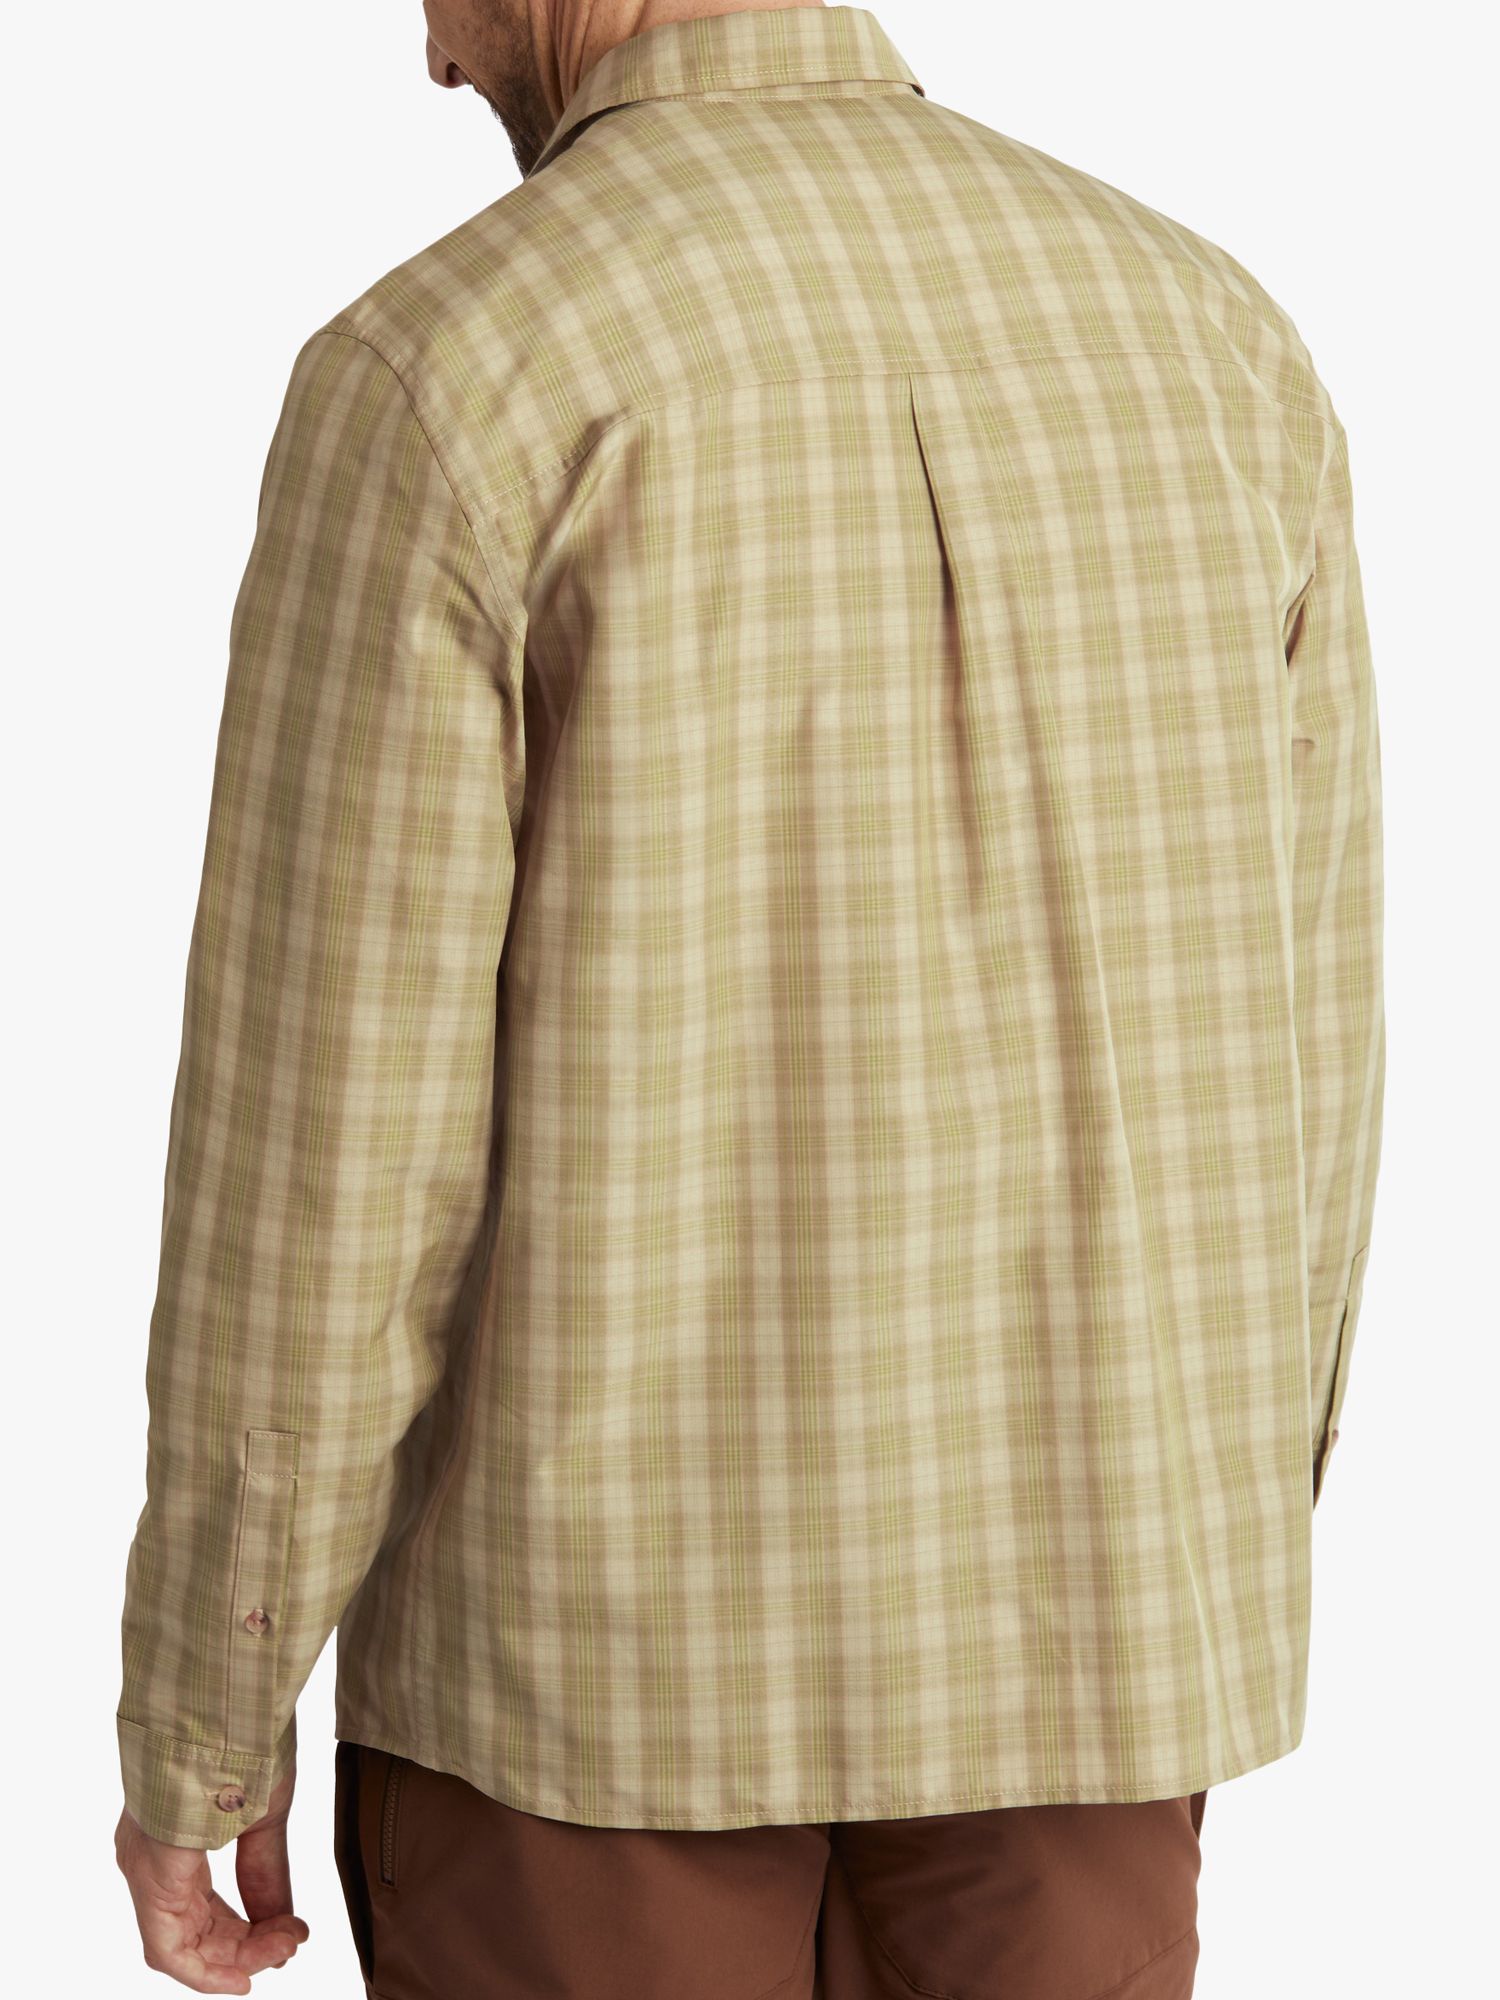 Rohan Coast Long Sleeve Check Shirt, Stone/Citrus Green, S